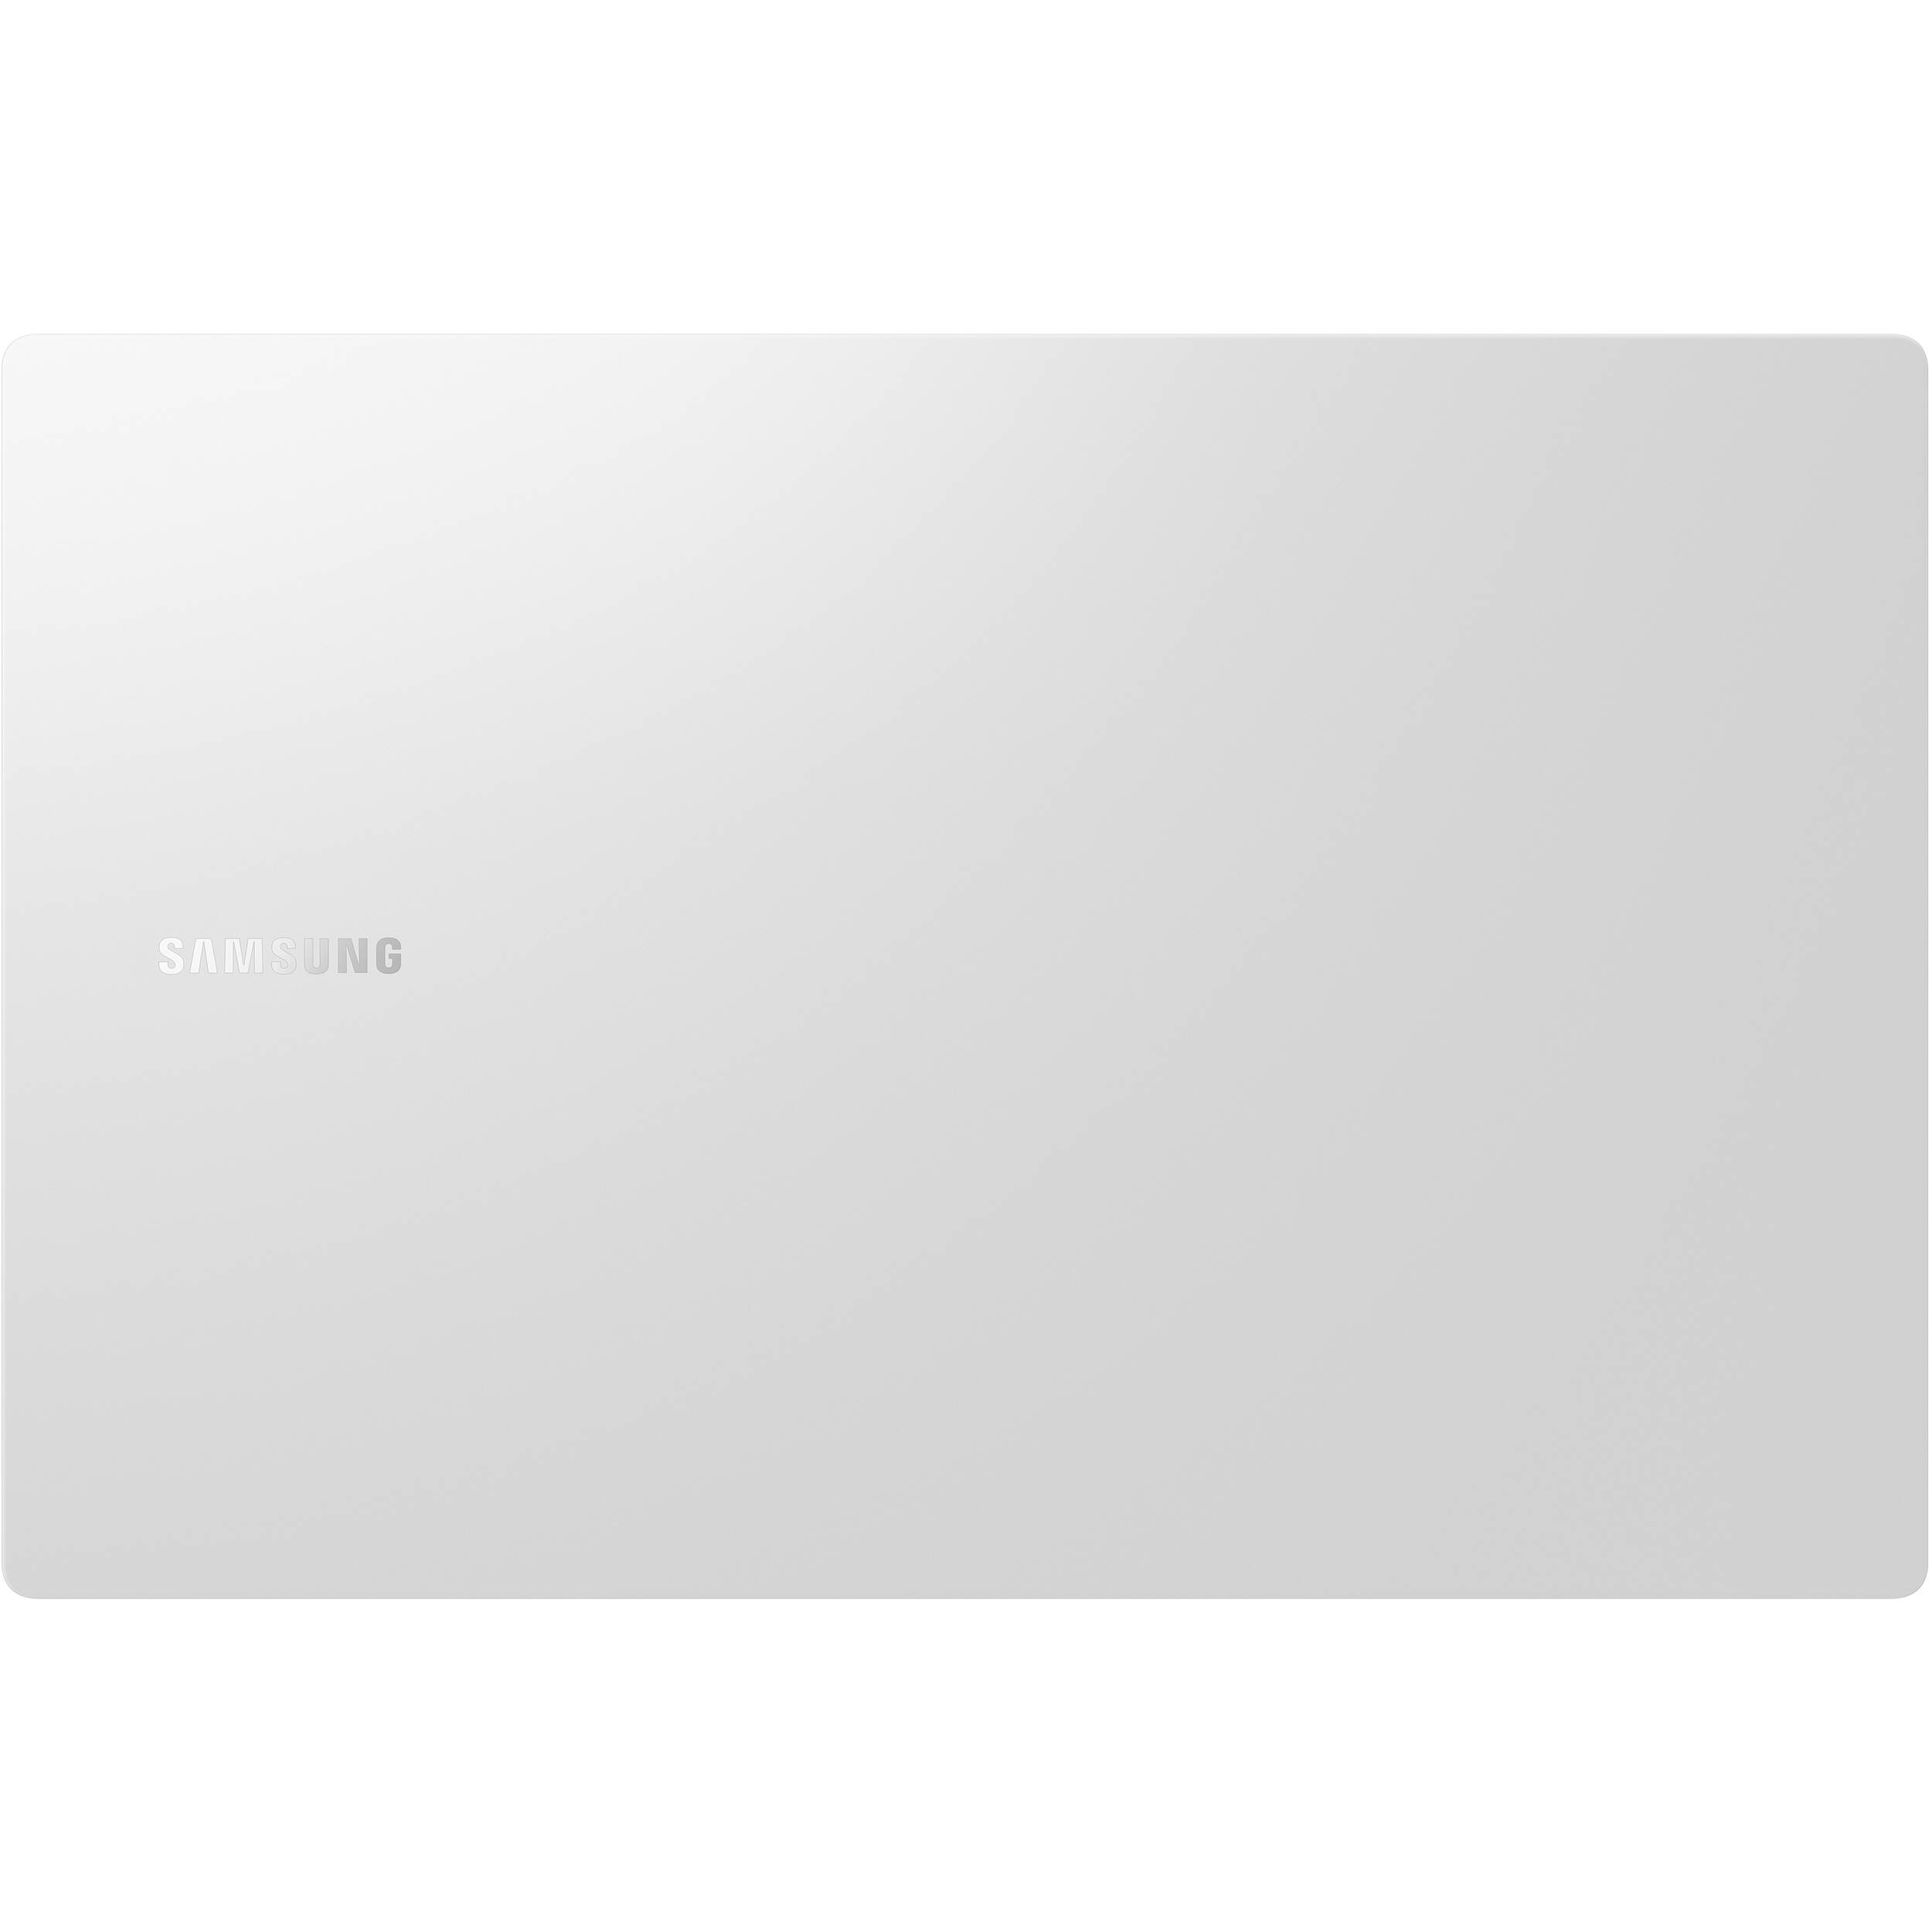 Samsung NP930XDB-KE1US-RB Book Pro 13.3" FHD i7-1165G7 8GB 512GB W10H, Silver - Certified Refurbished